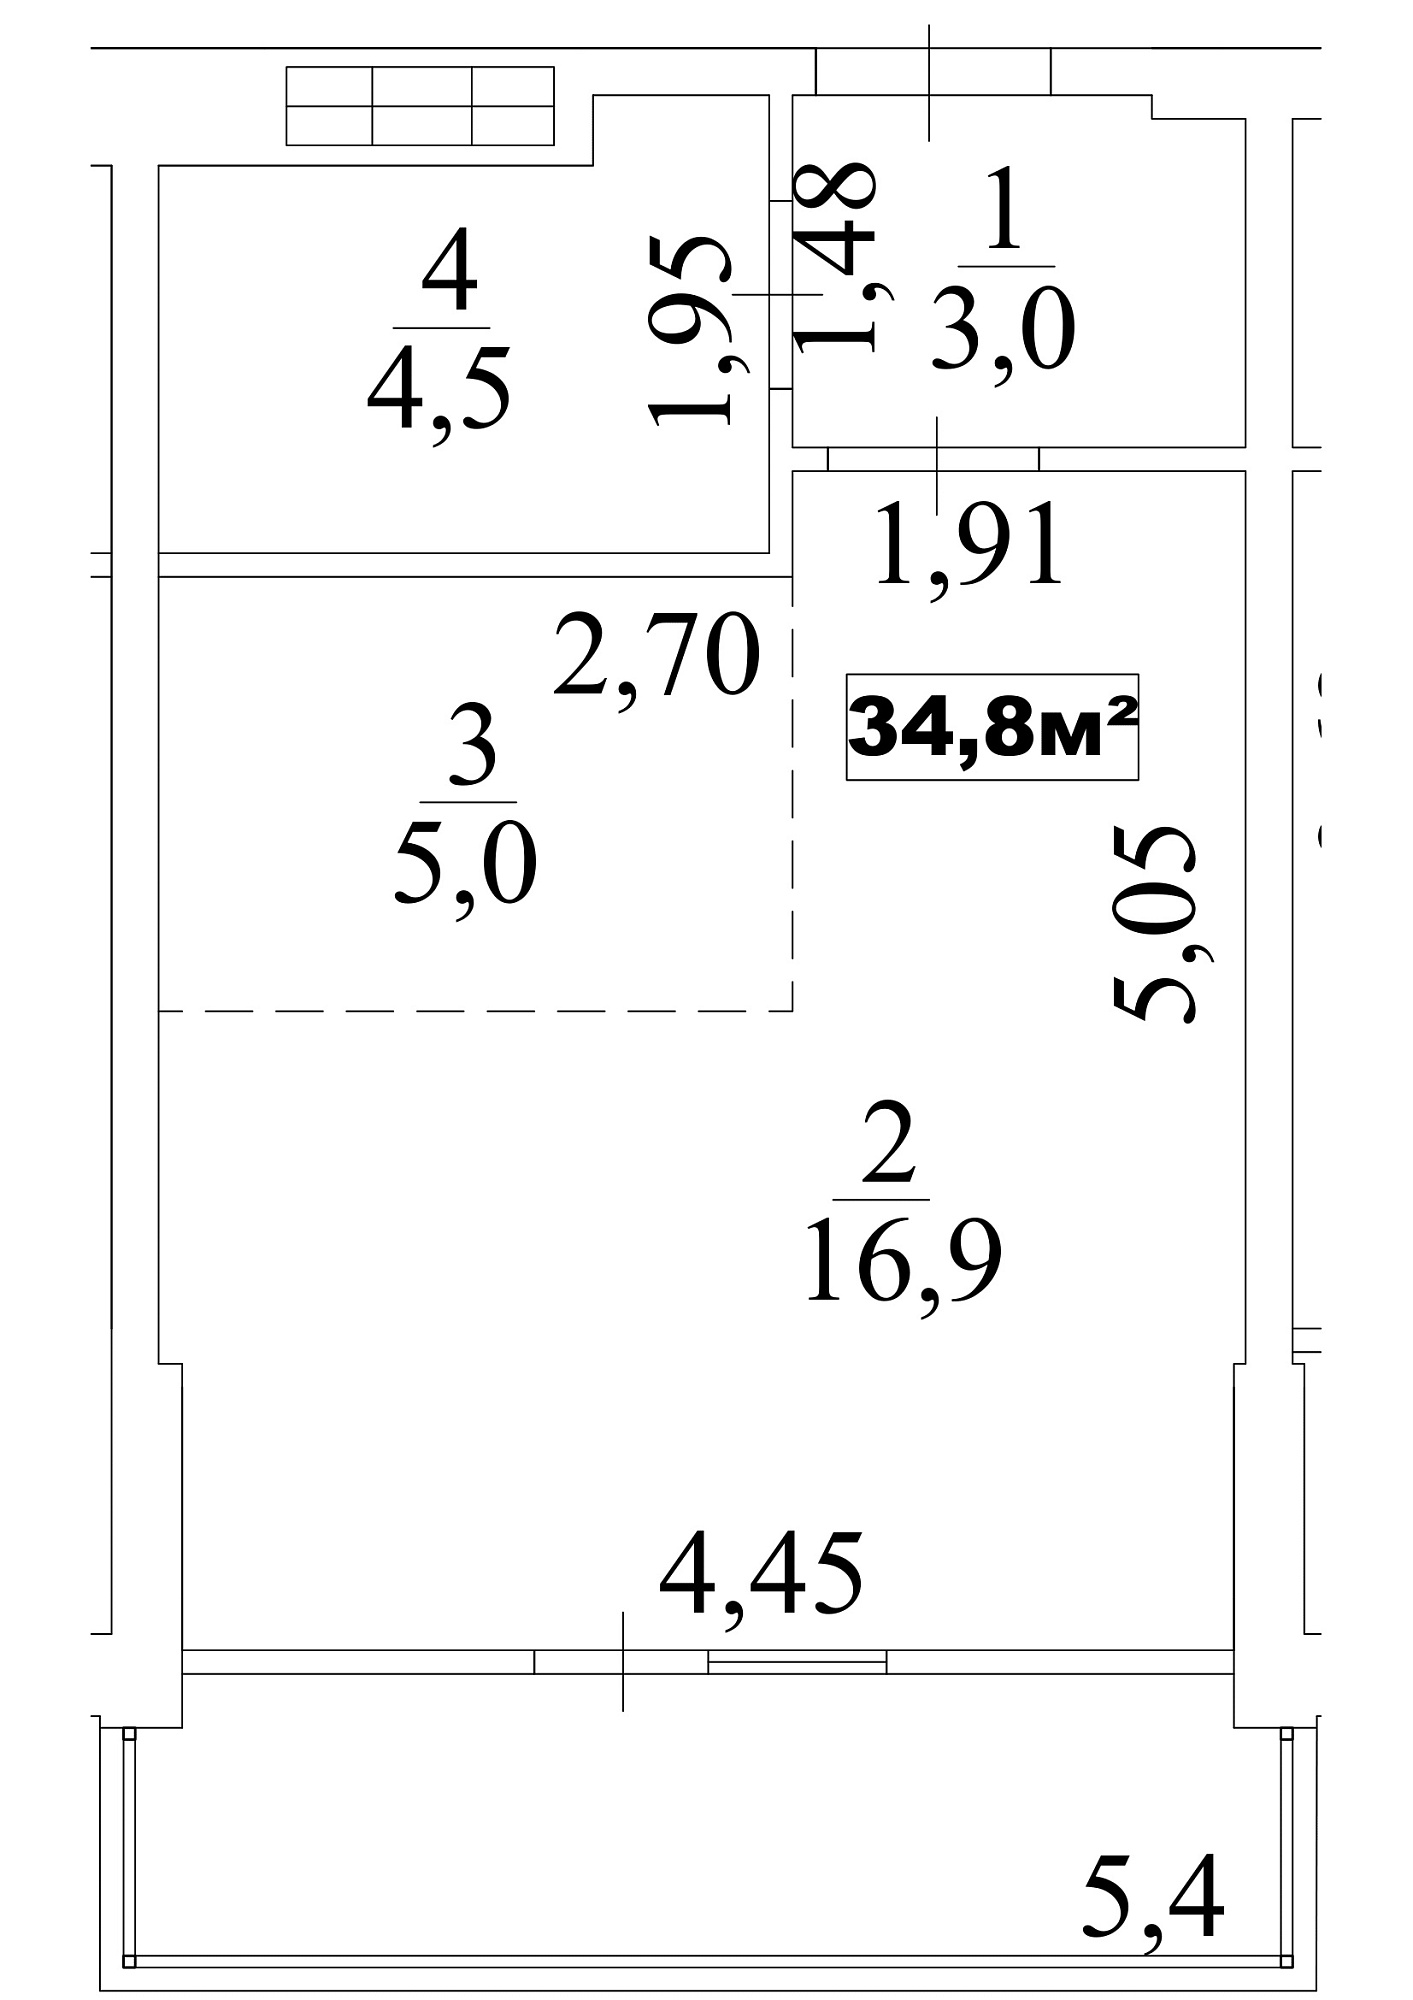 Planning Smart flats area 34.8m2, AB-10-02/0010б.